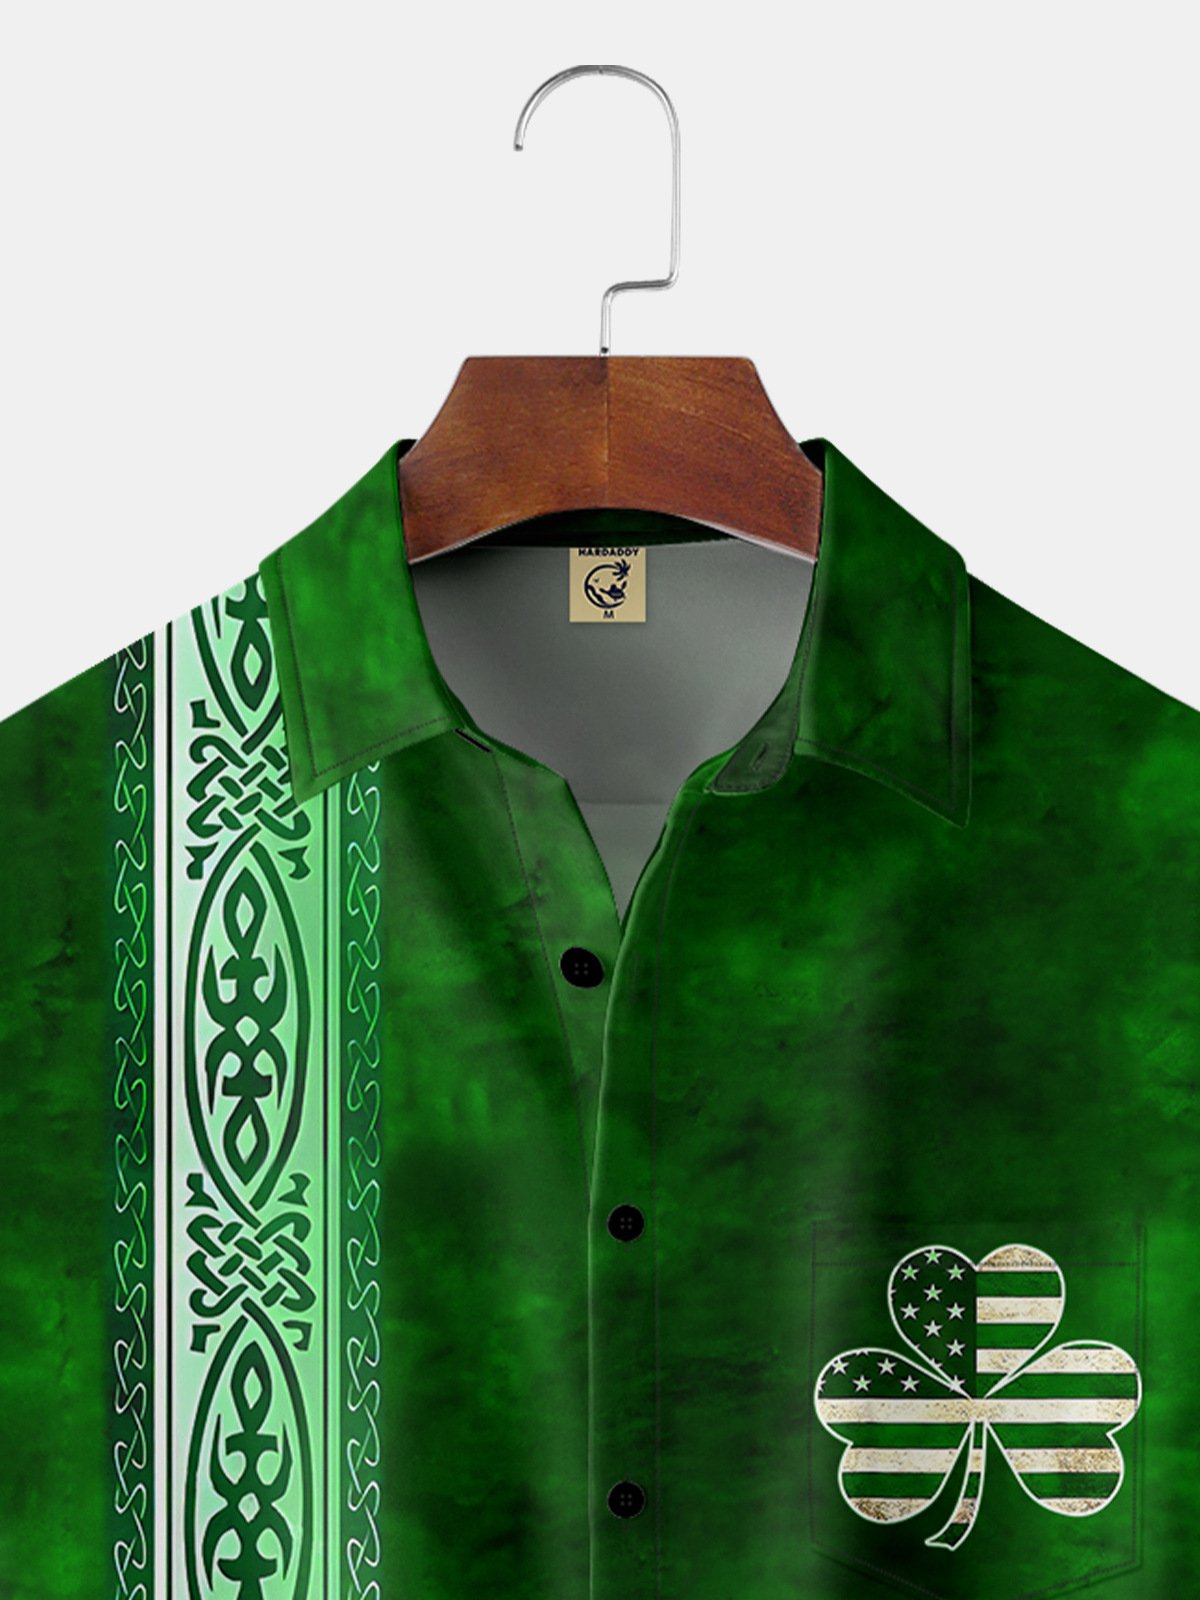 Hardaddy Hawaiian Button Up Shirt for Men Green St. Patrick's Day Lucky Clover Regular Fit Short Sleeve Shirt St Paddy's Day Shirt